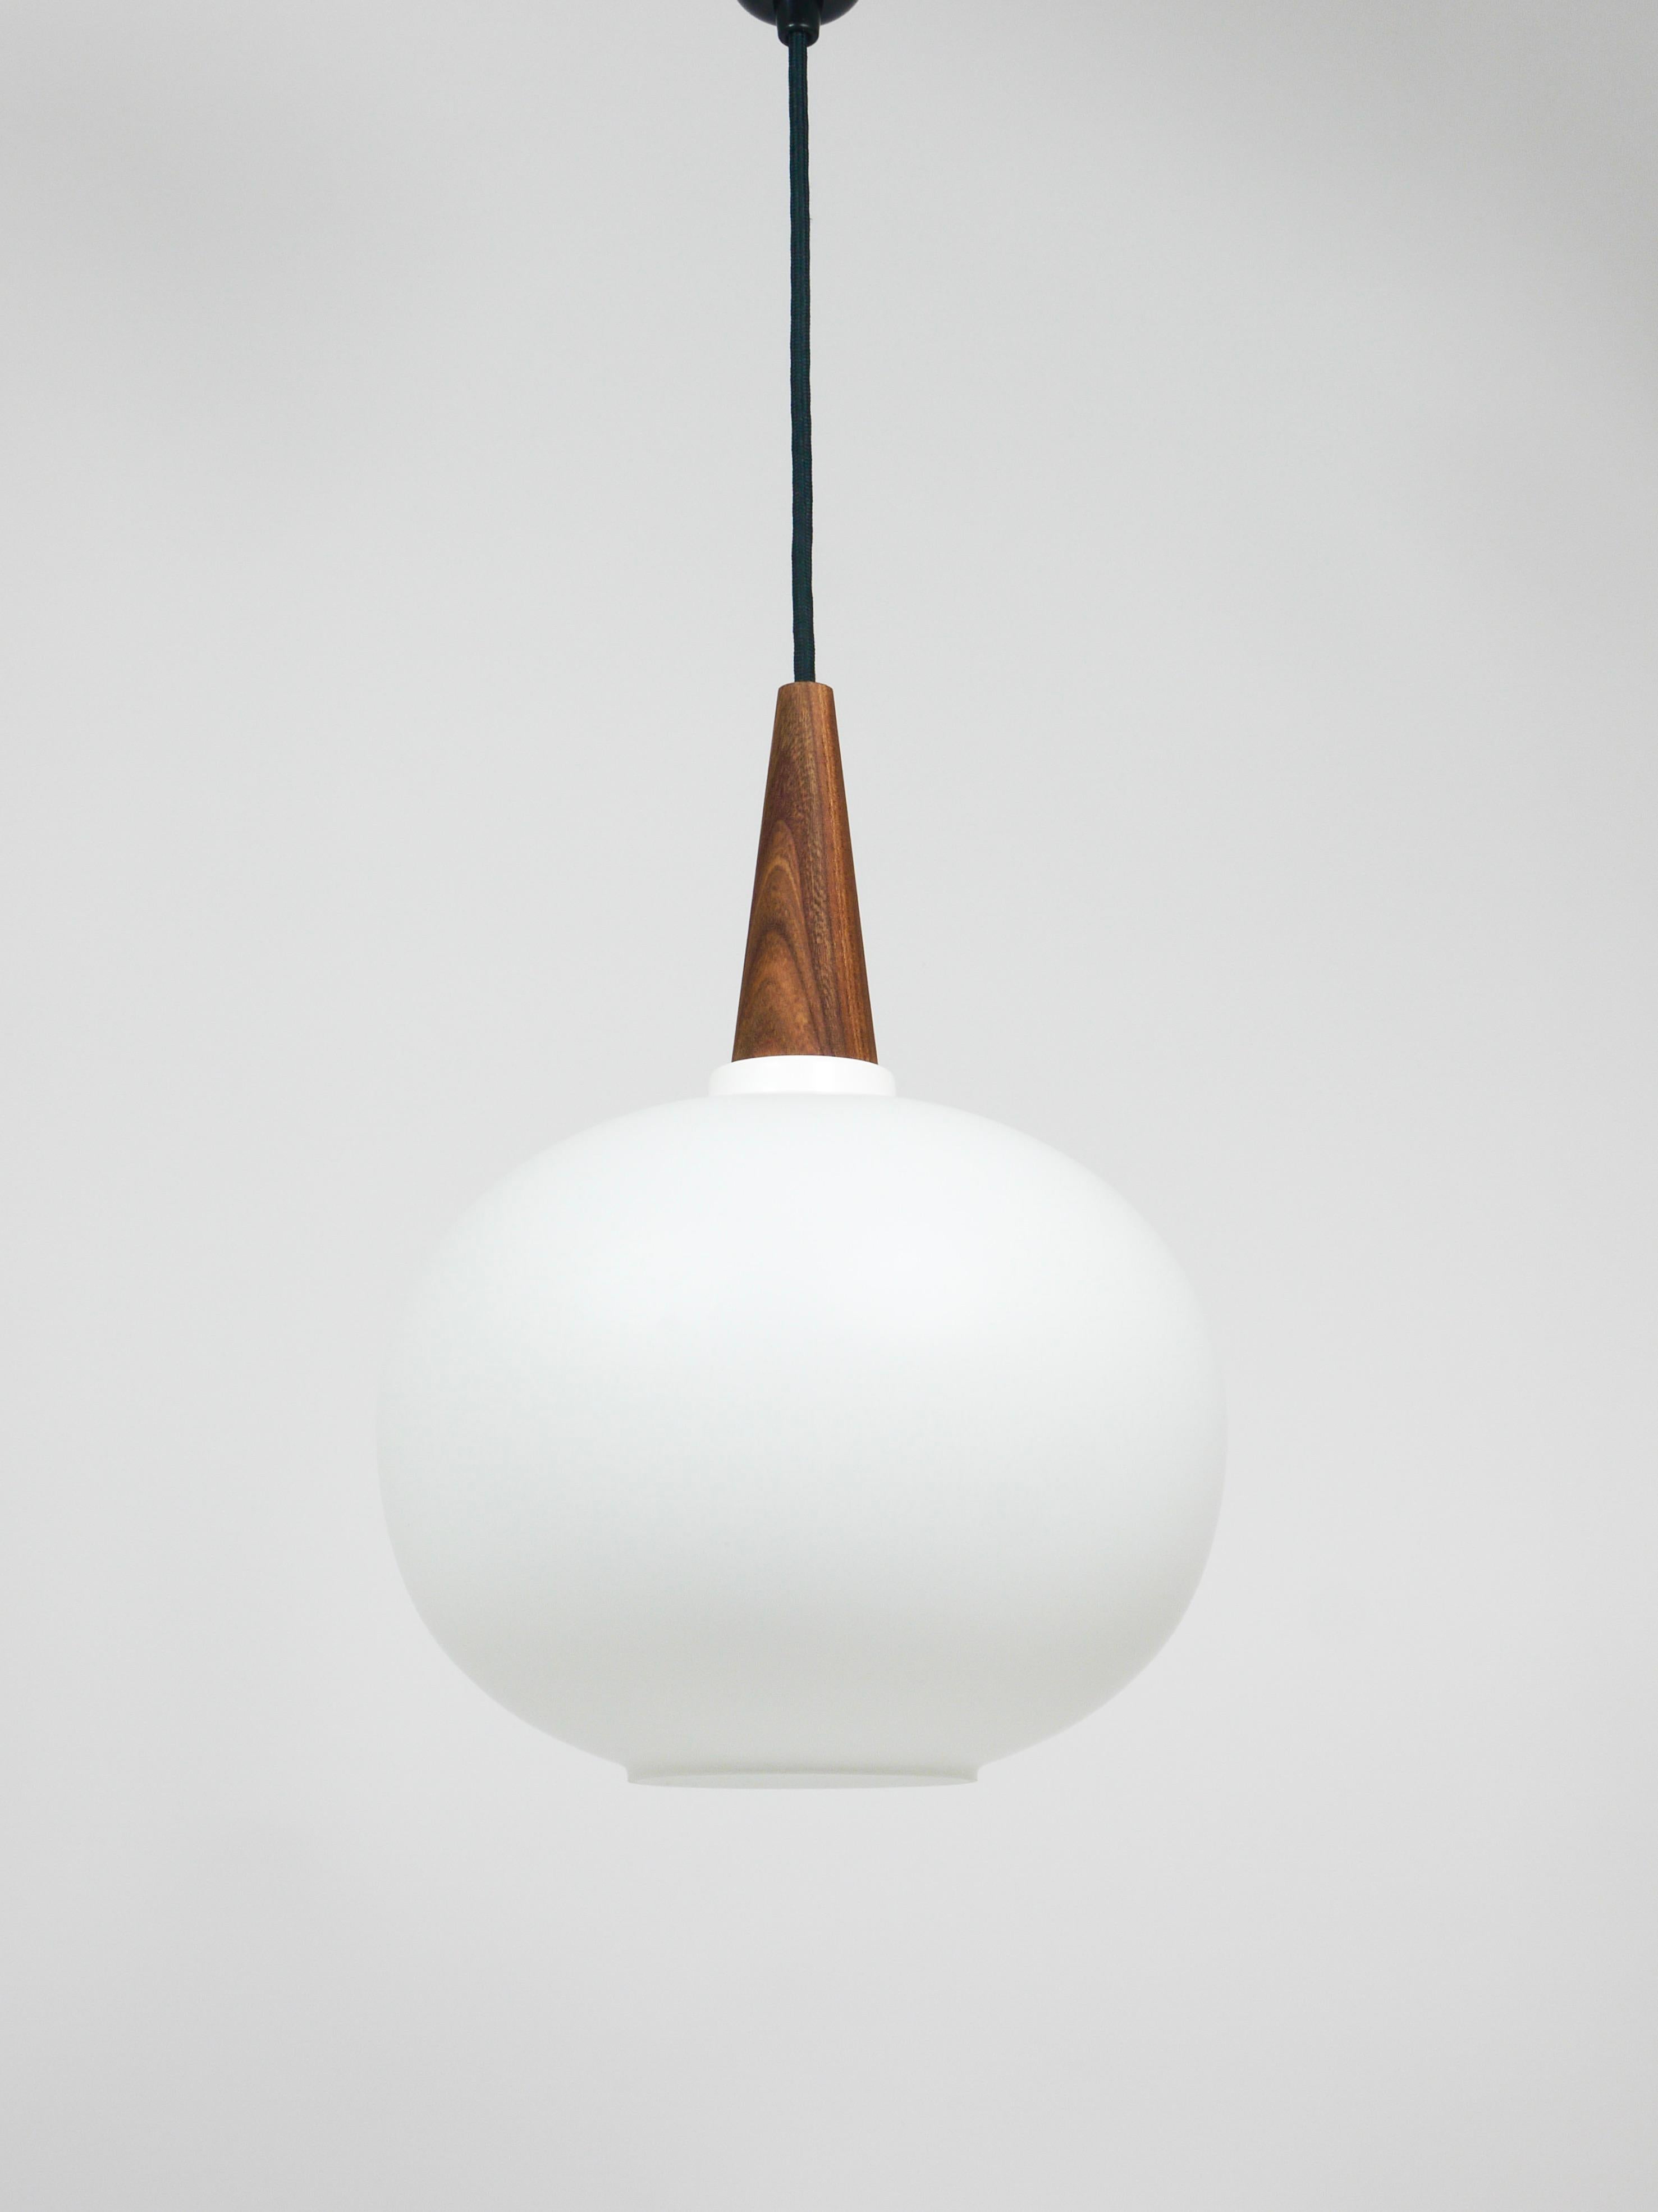 Glass Louis Kalff Teak & Opaline Pendant Suspension Lamp, Philips, Netherlands For Sale